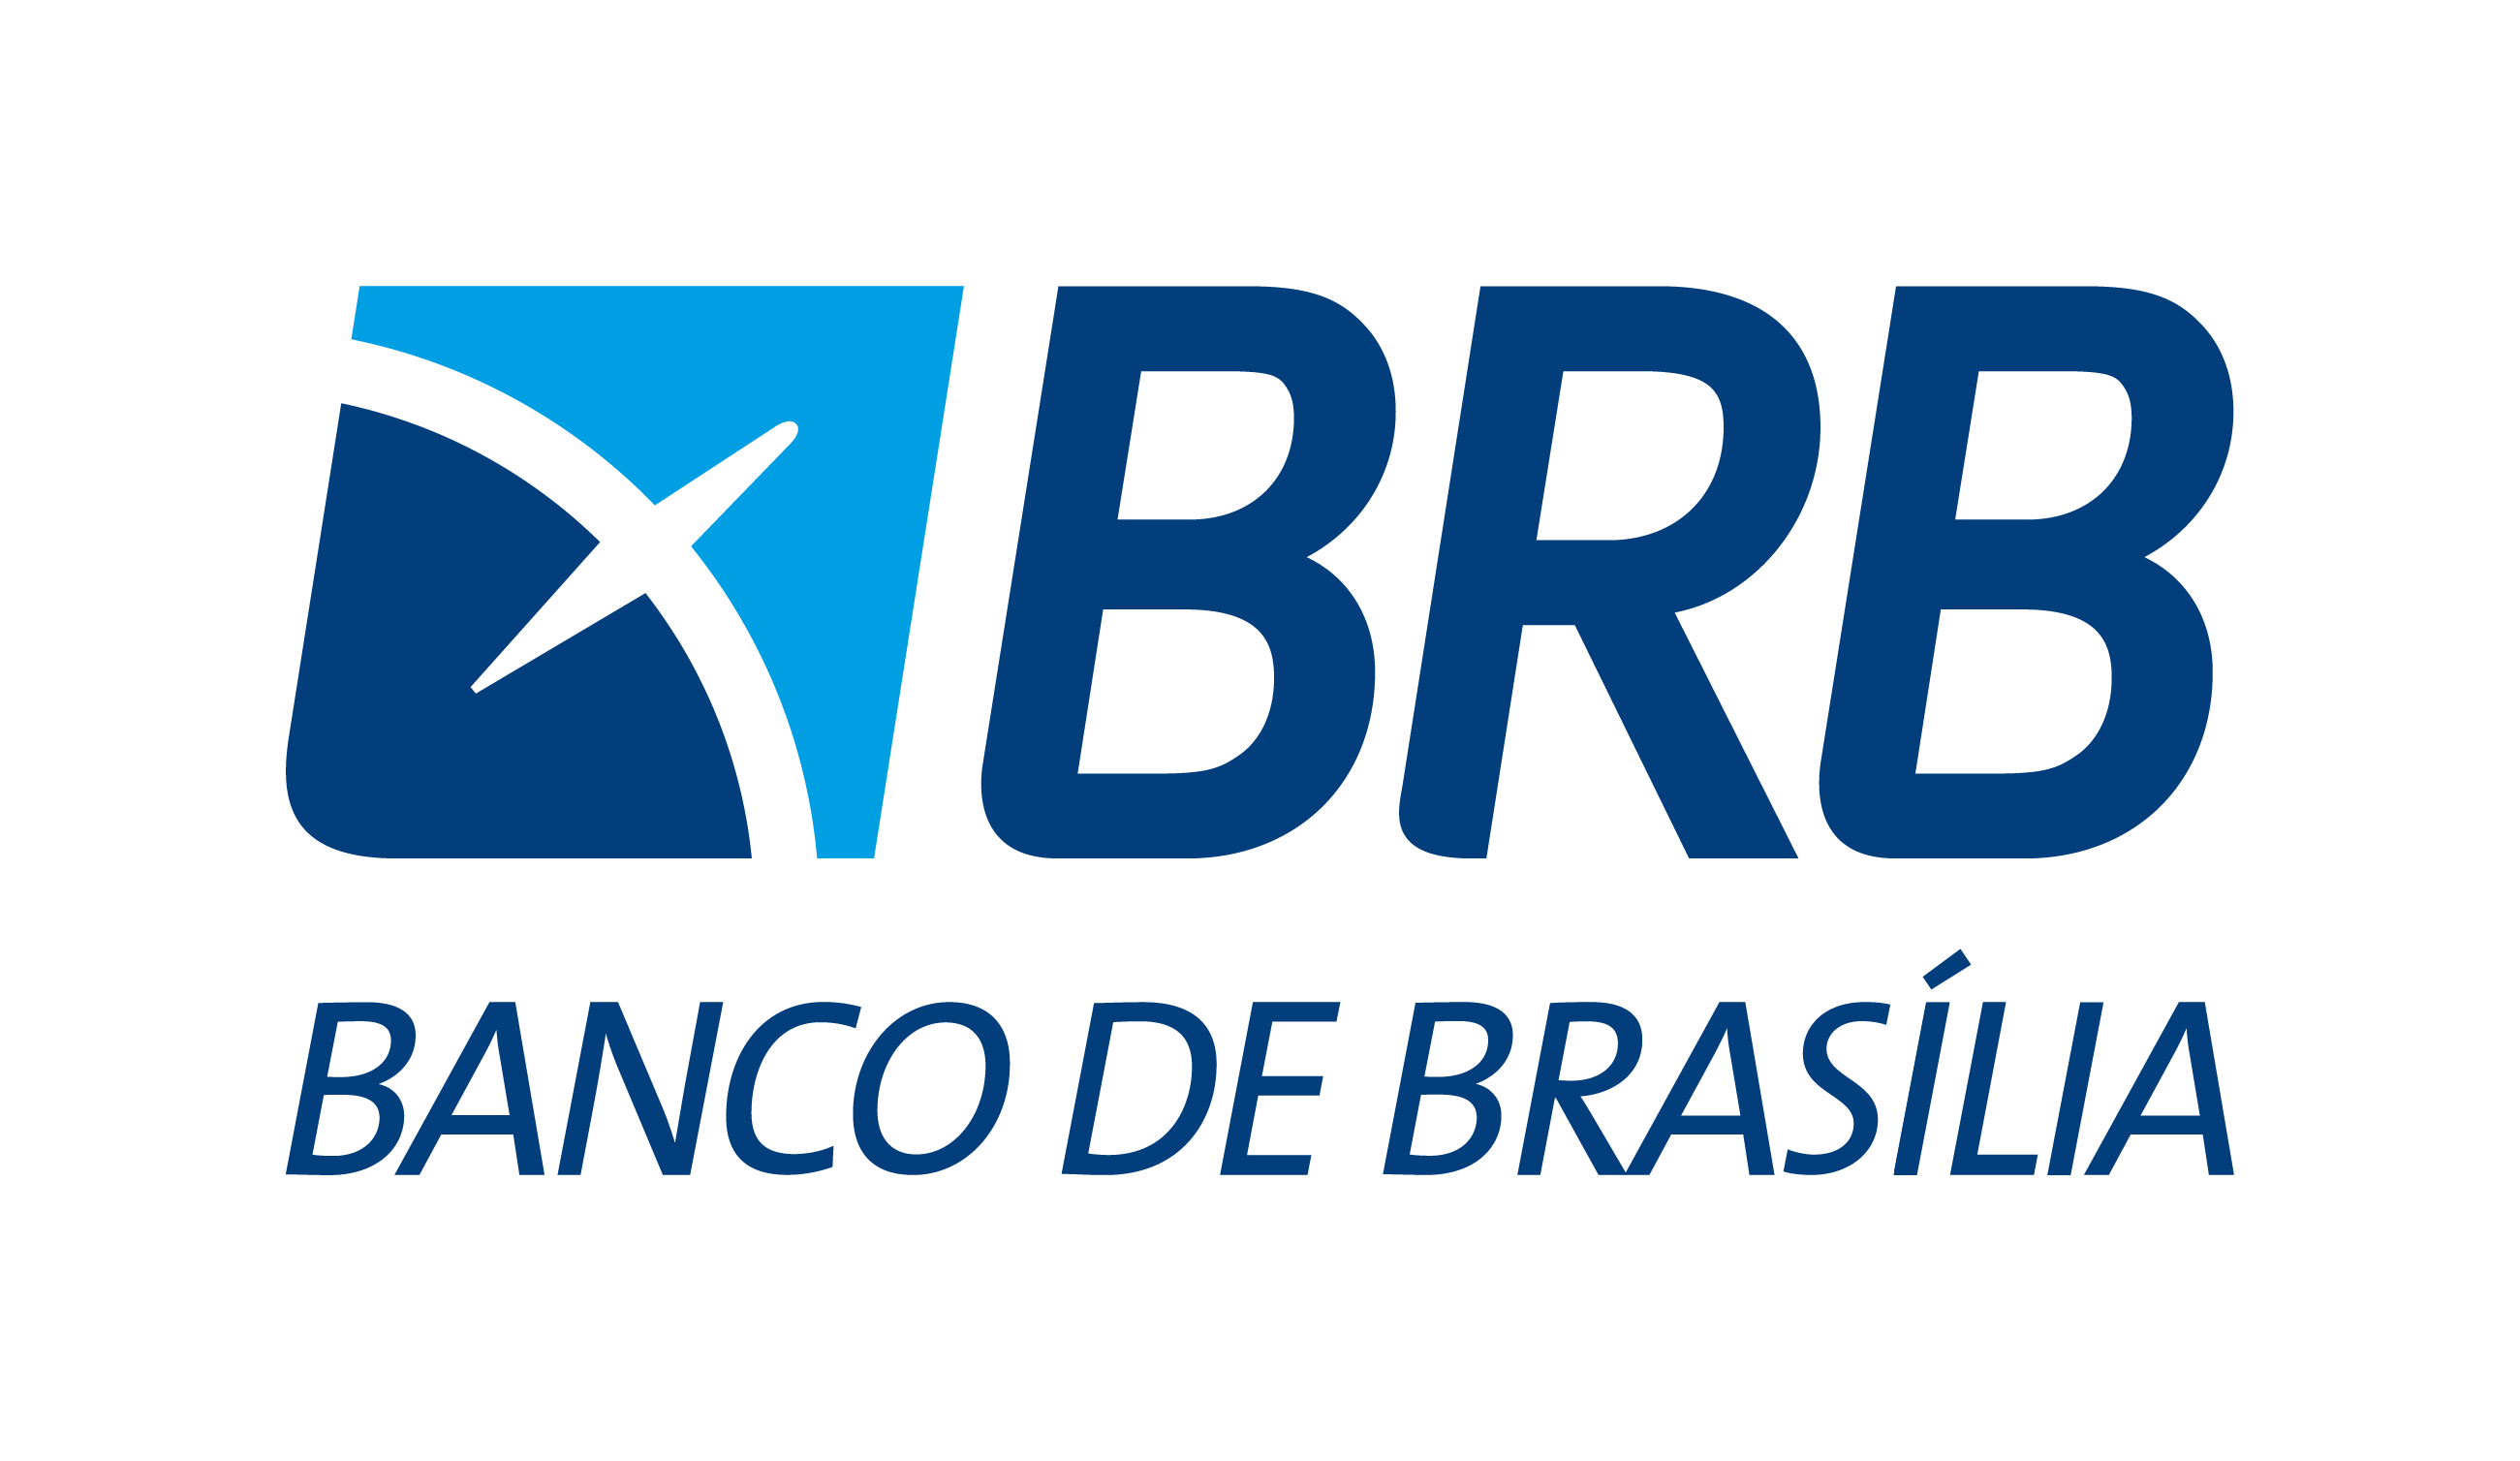 BRB Brand Logo